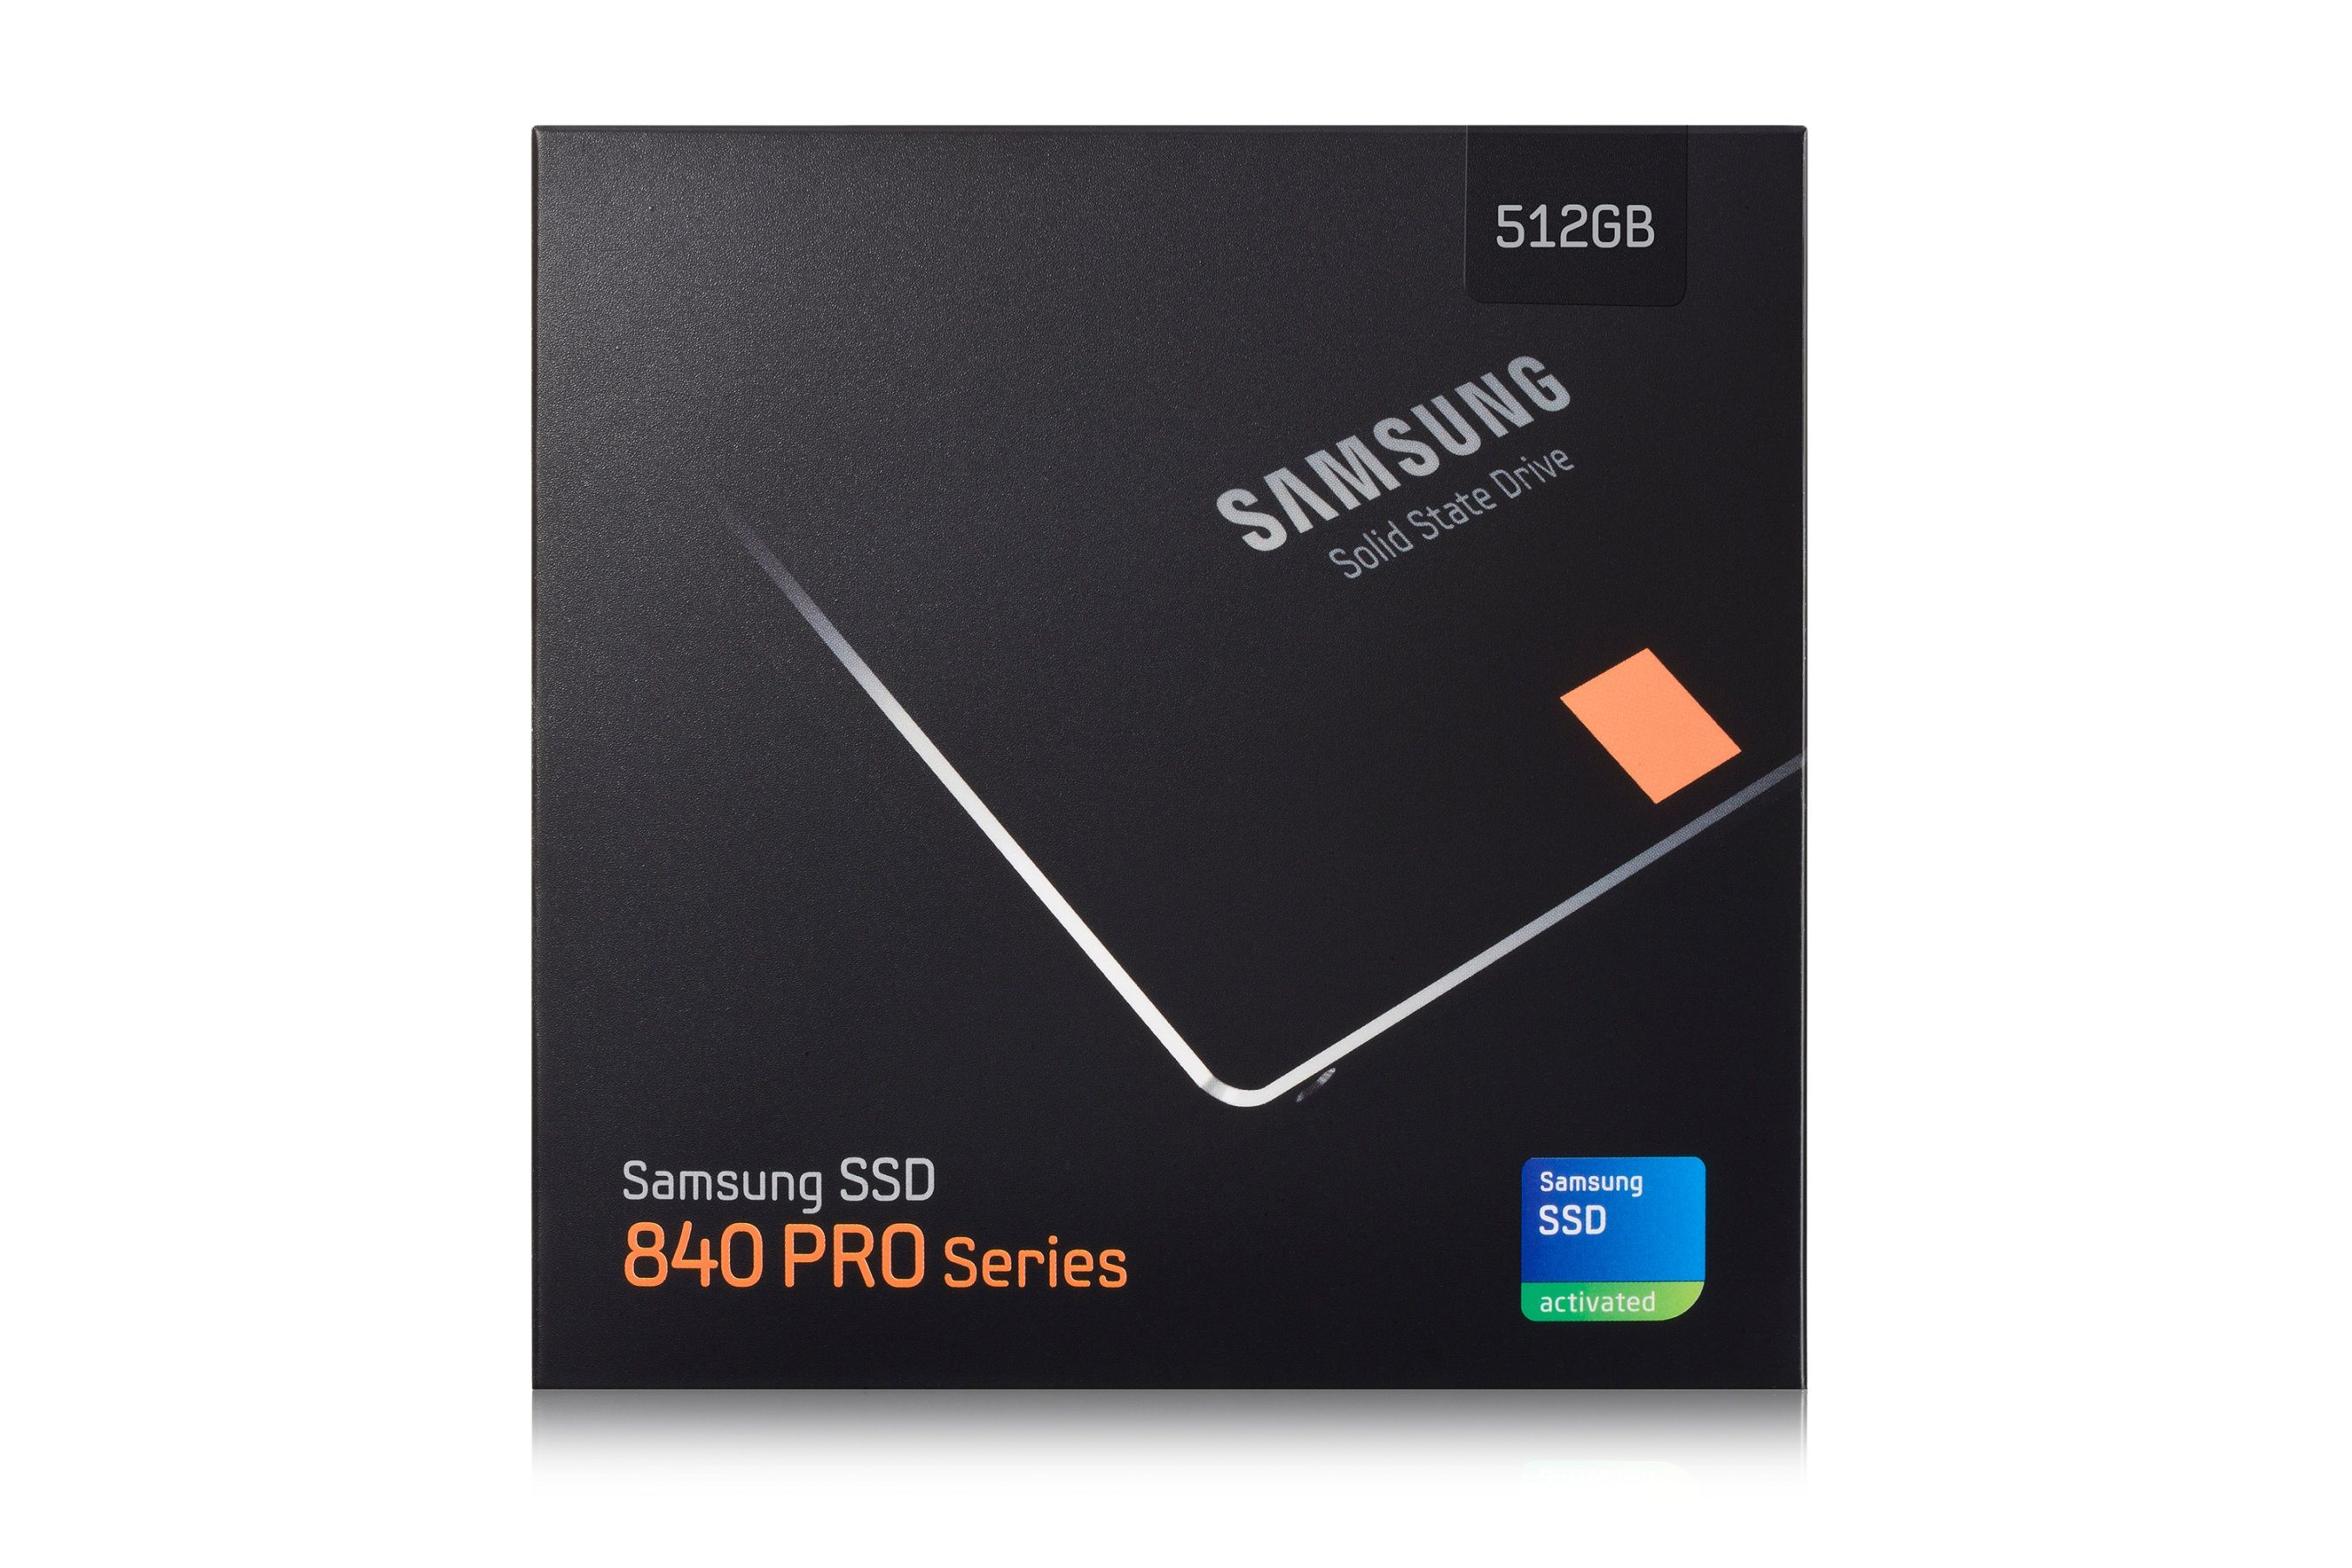 Pova 5 pro 256gb. Samsung SSD 840 Pro Series. SSD Samsung 128gb. Samsung 840 Pro 512gb. Samsung 840 Pro MZ-7pd256bw.